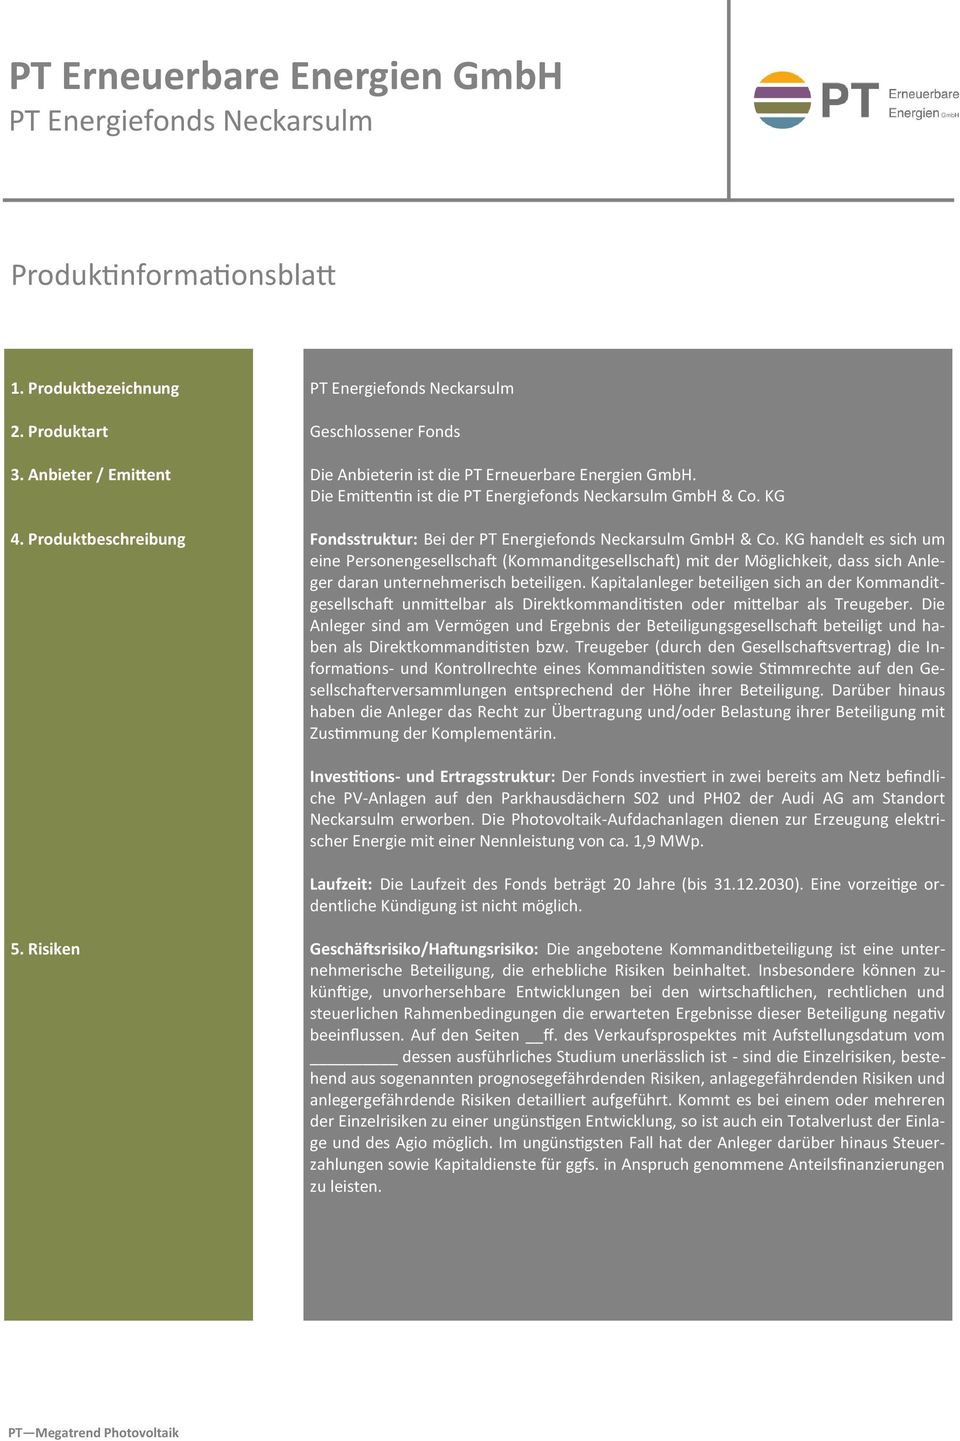 KG Fondsstruktur: Bei der PT Energiefonds Neckarsulm GmbH & Co.